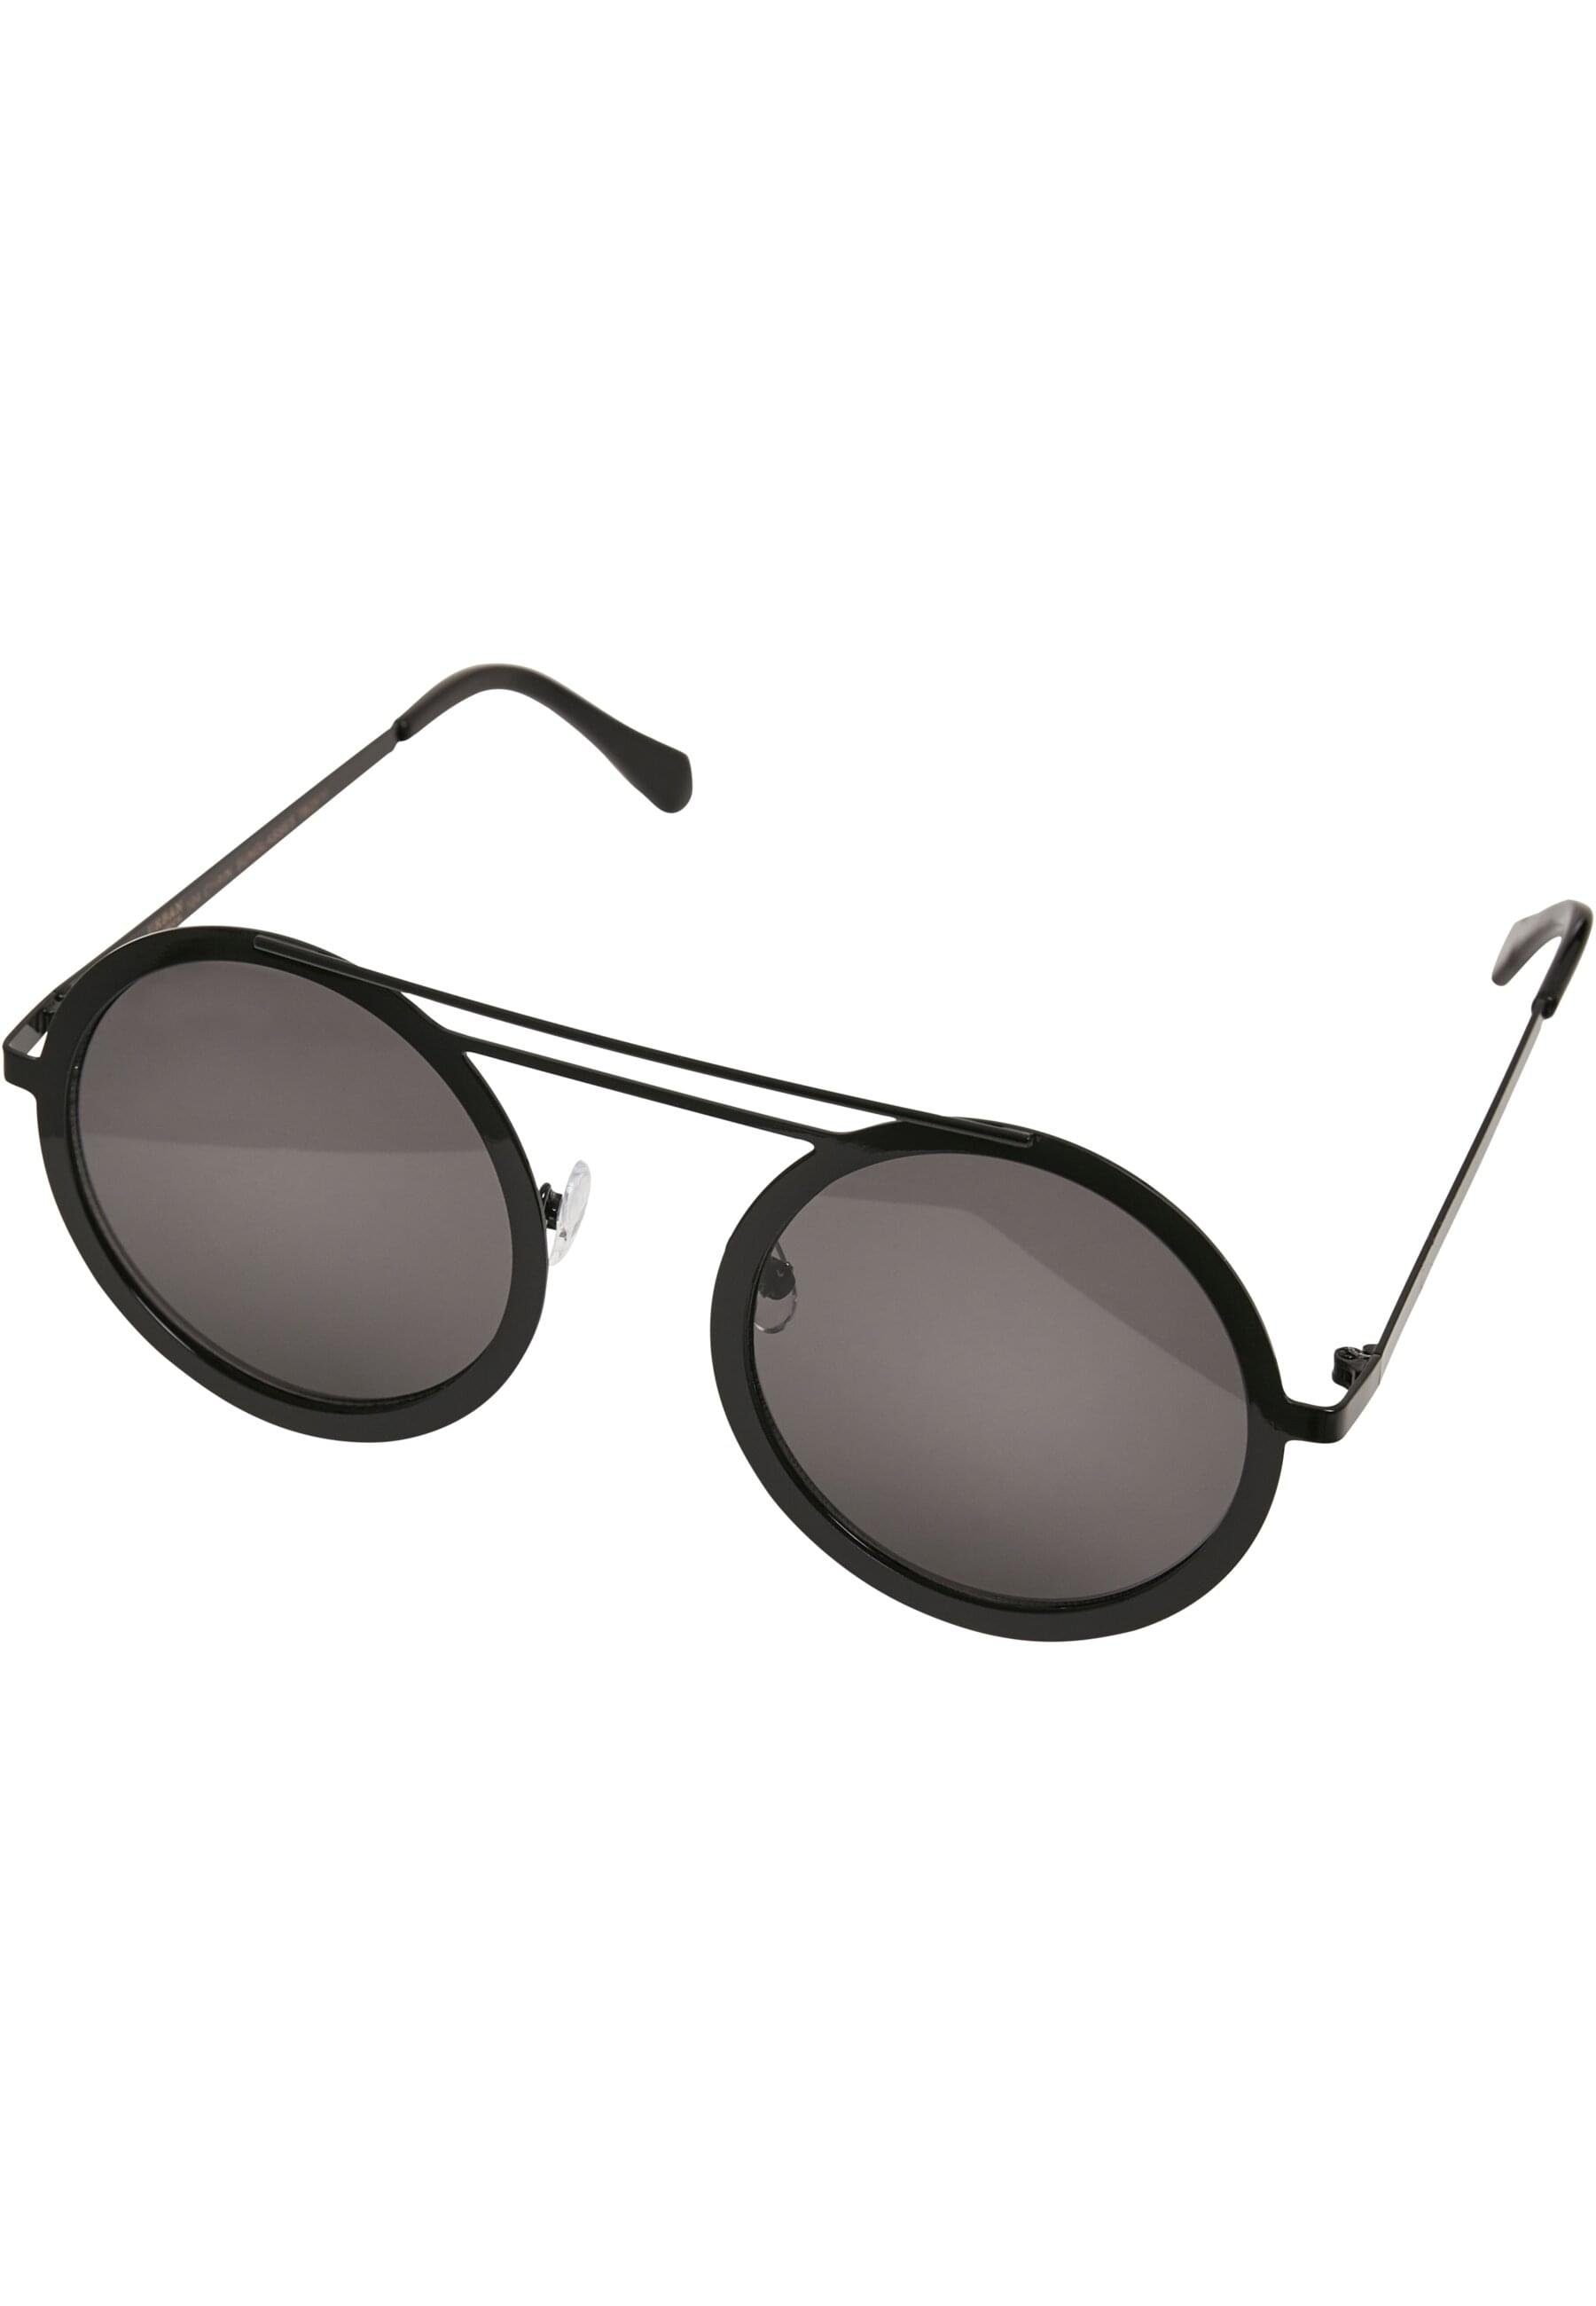 URBAN CLASSICS Sonnenbrille Unisex Sunglasses black/black 104 Chain